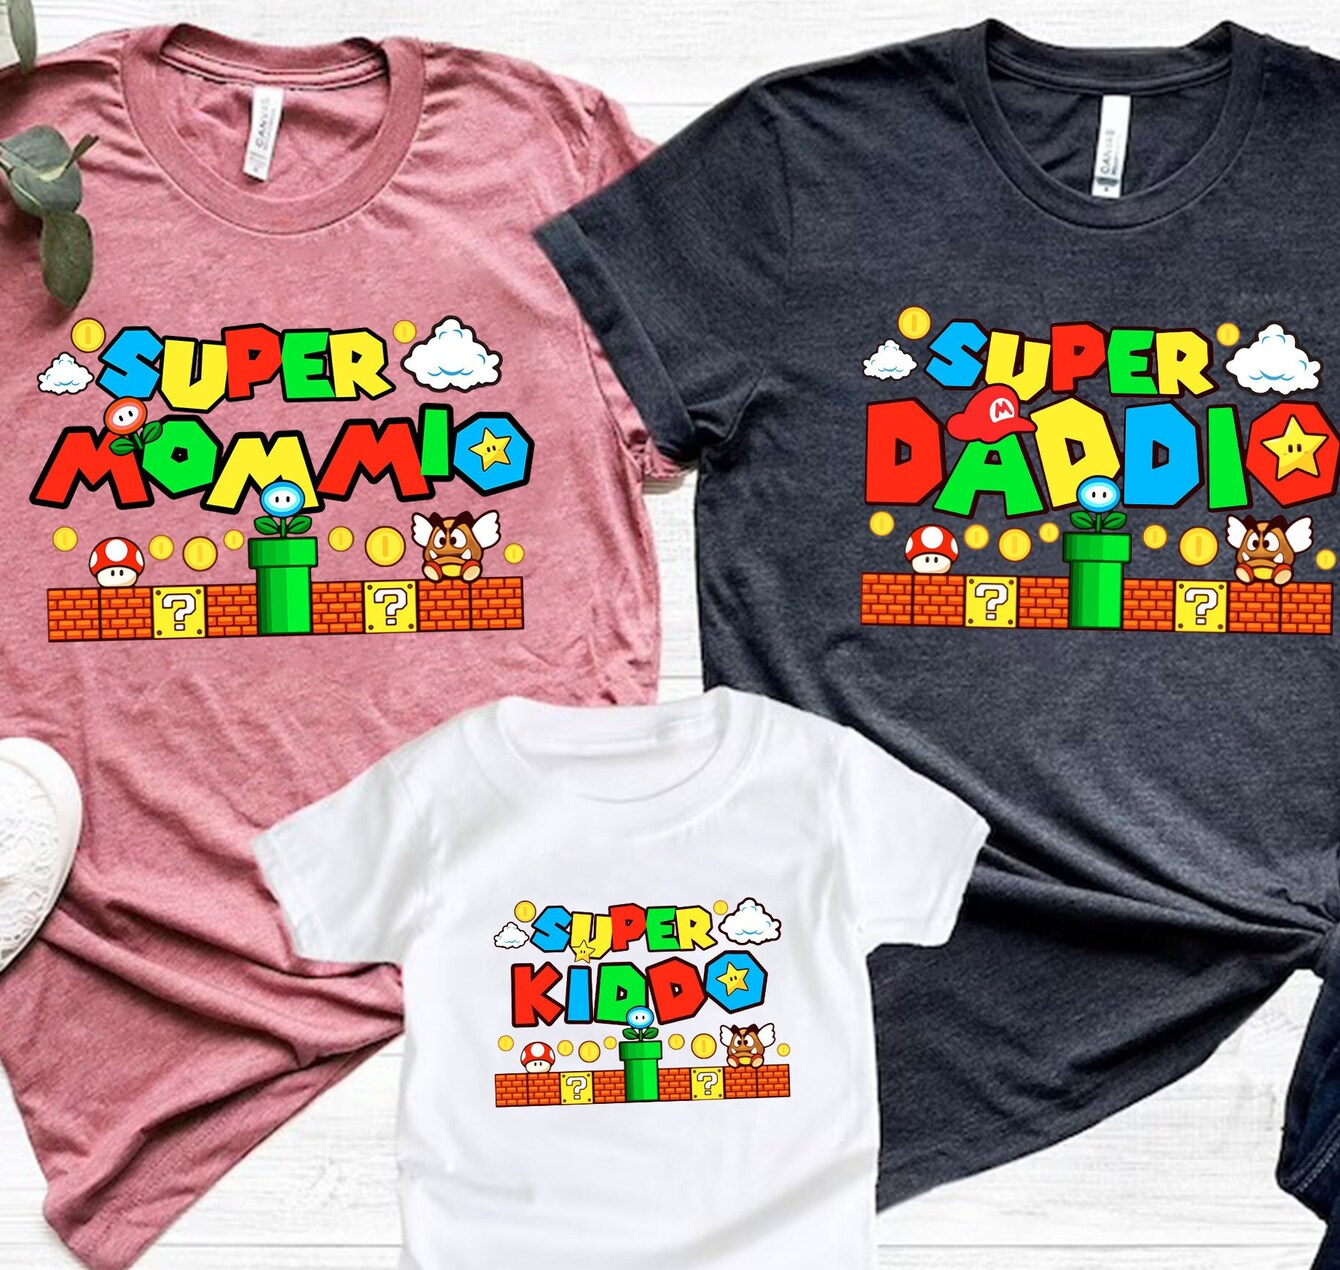 Super Mario Customized Birthday Shirts, Super Mario Family Birthday Party Tee,Custom Mario Shirt,Super Mario Theme Shirt,Mario Birthday Gift